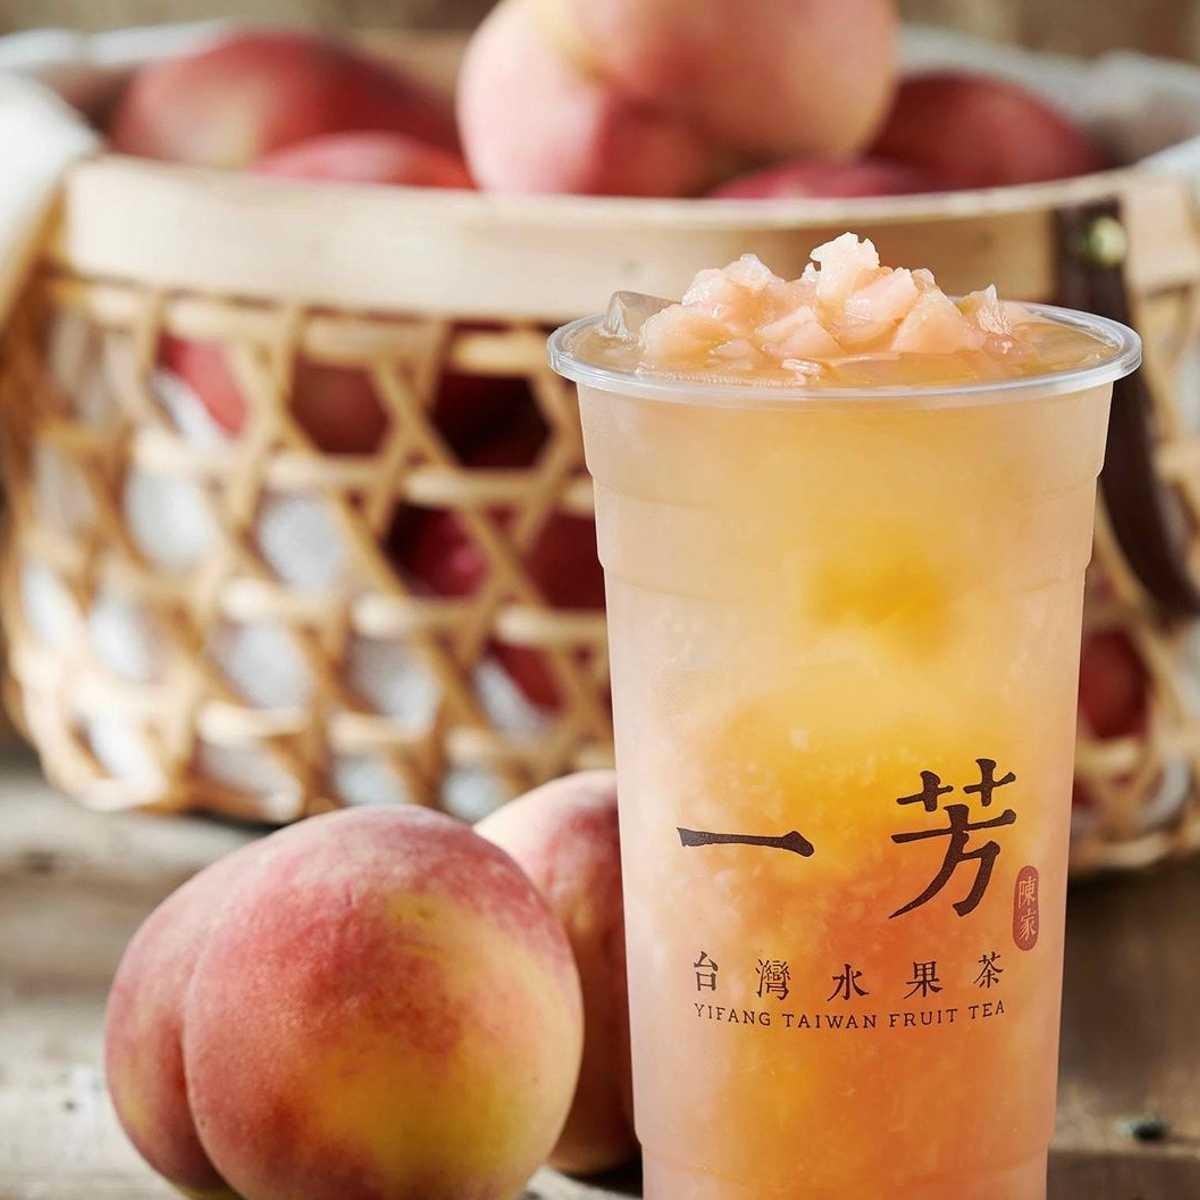 Peach Fruit Tea